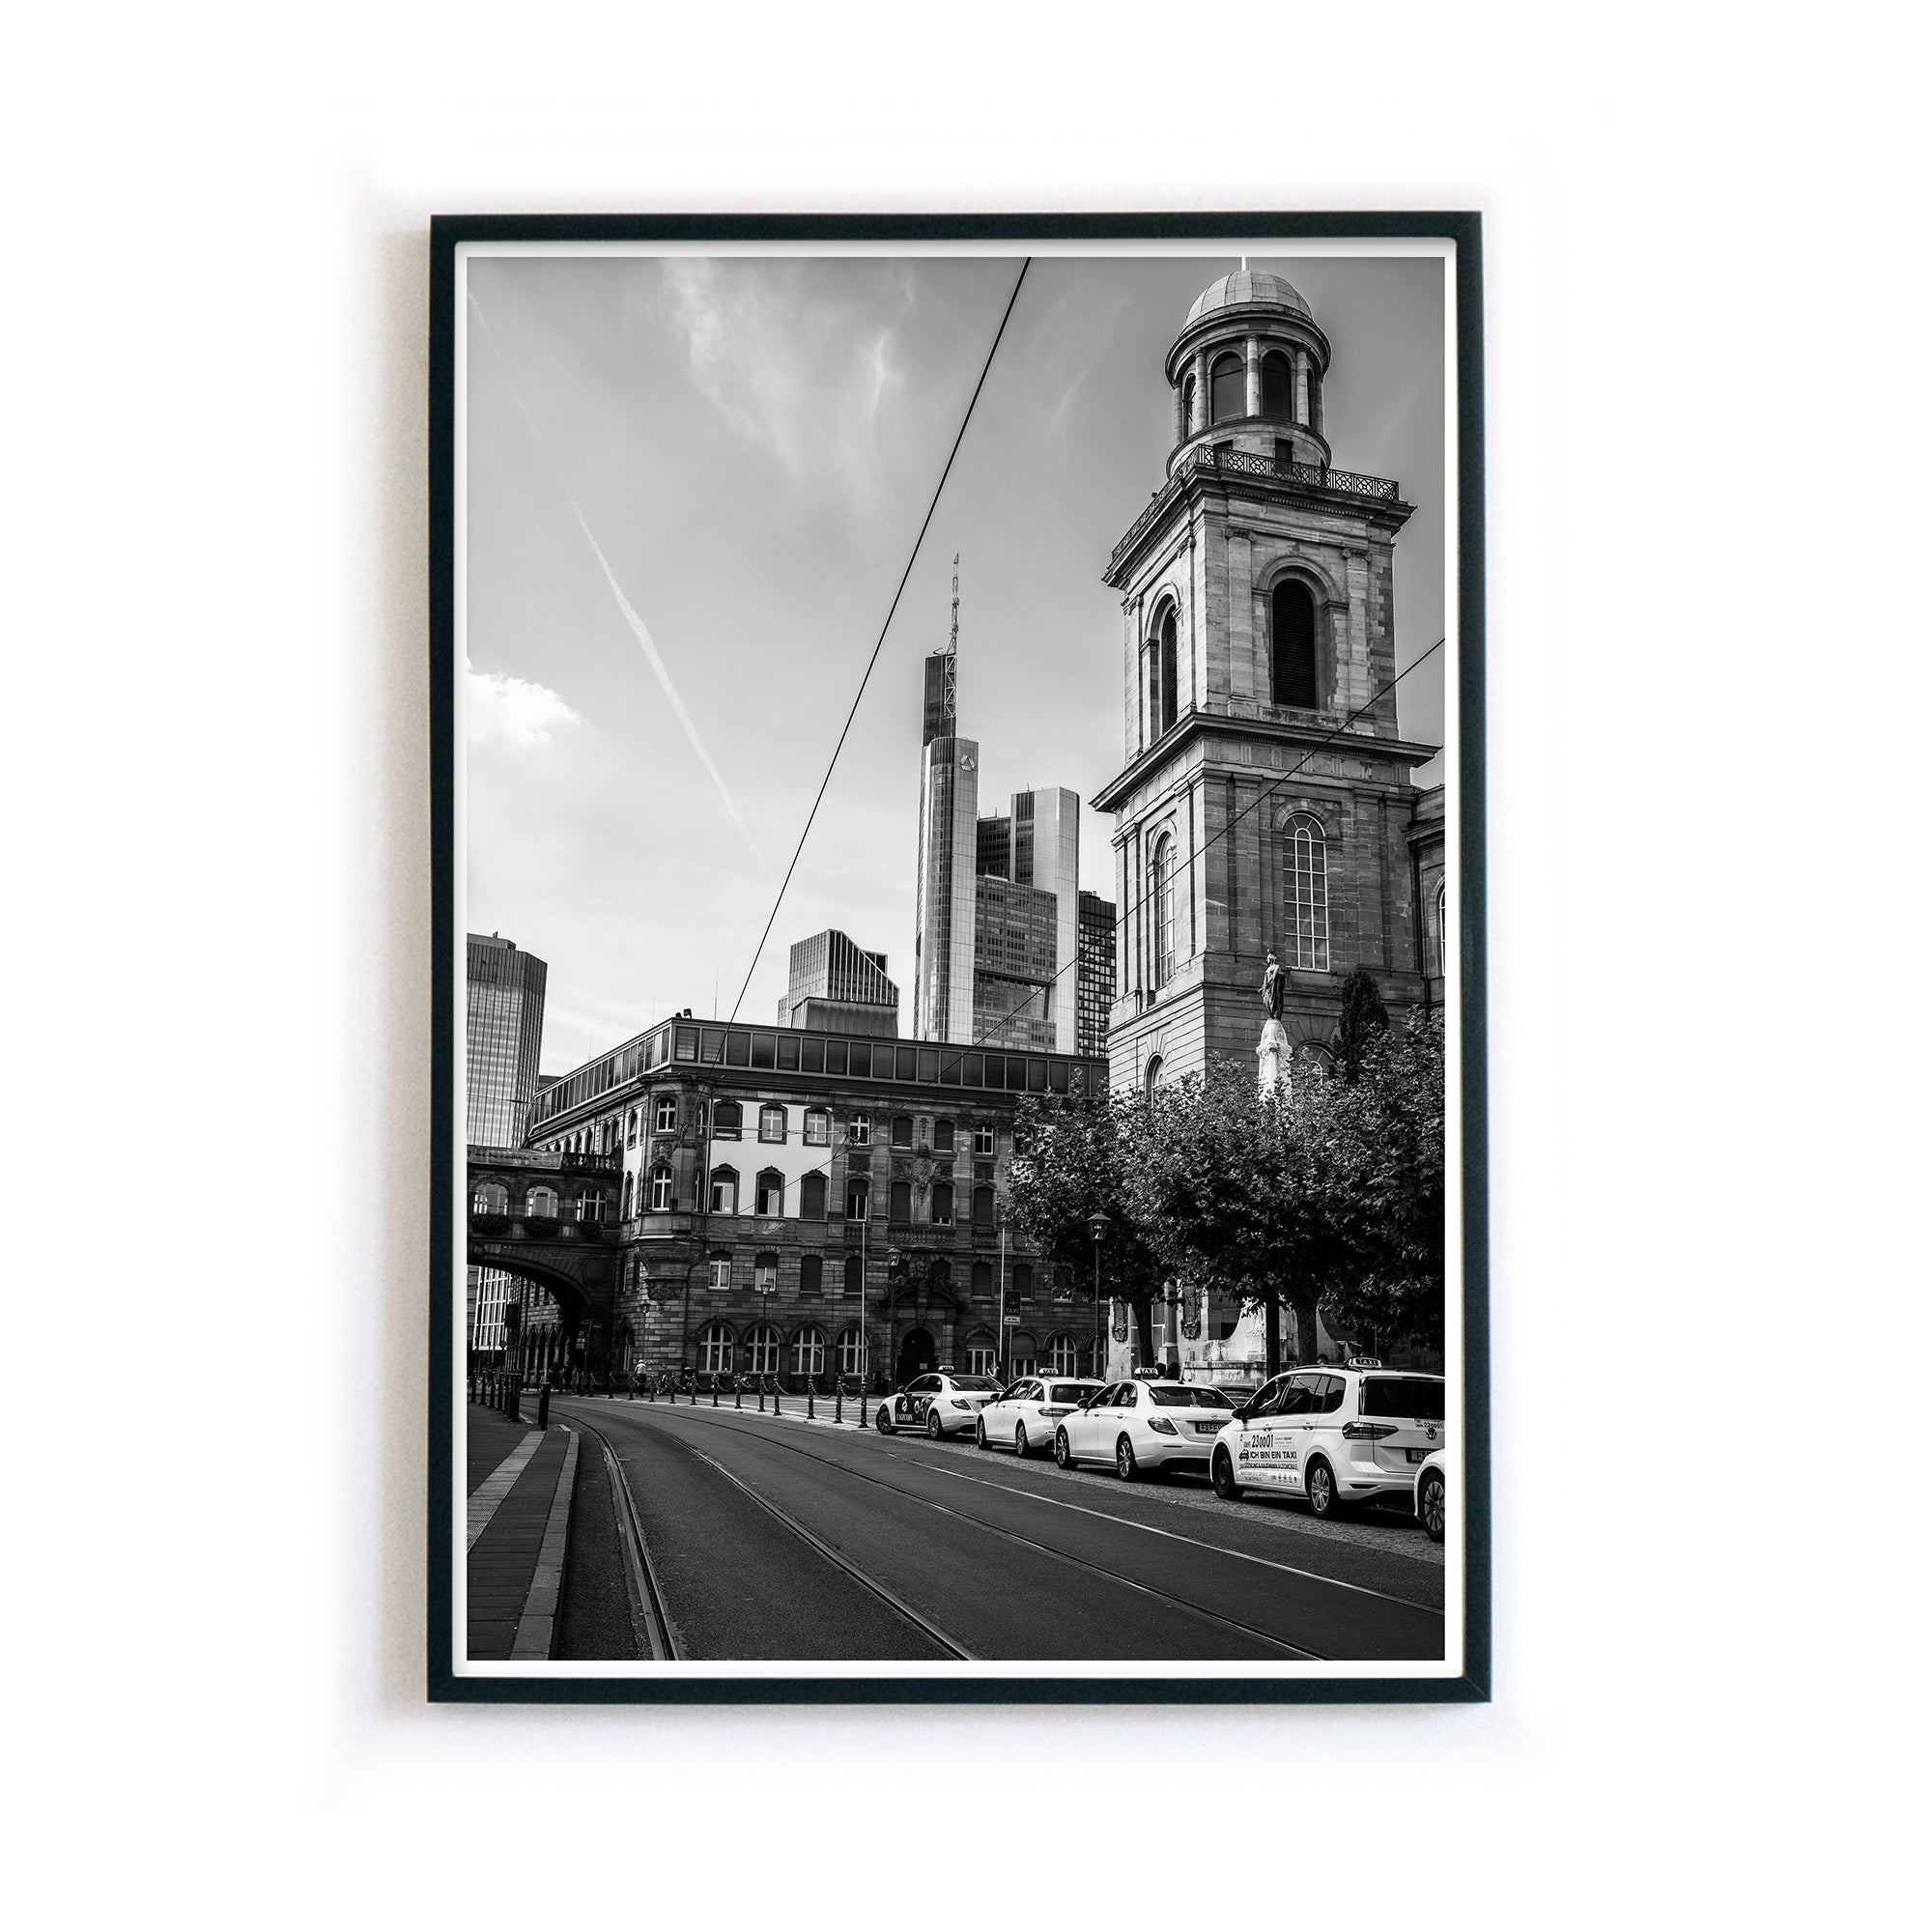 4one-pictures-frankfurt-am-main-poster-skyline-bild-ffm-kunstdruck-shop-rahmen-5mm_de660507-b82a-4298-86f5-a76ec8439d3b.jpg